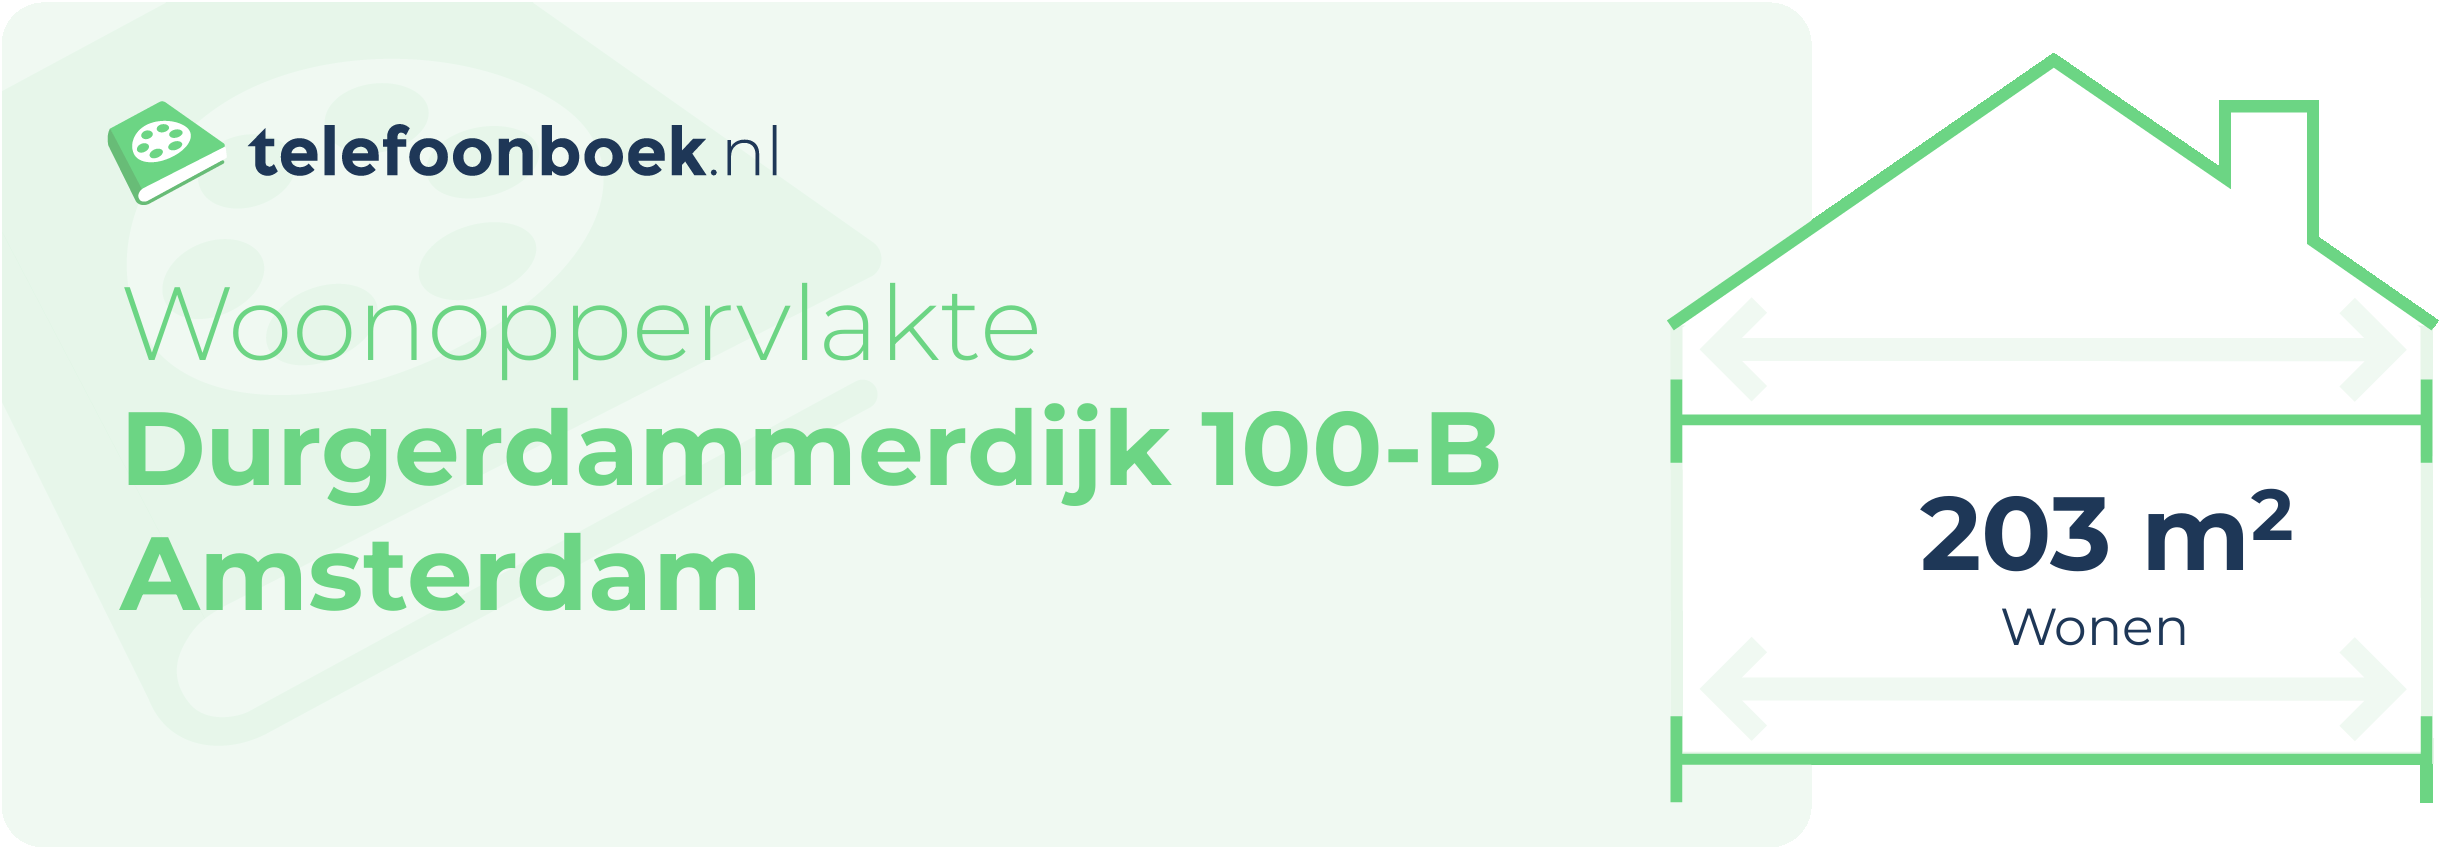 Woonoppervlakte Durgerdammerdijk 100-B Amsterdam